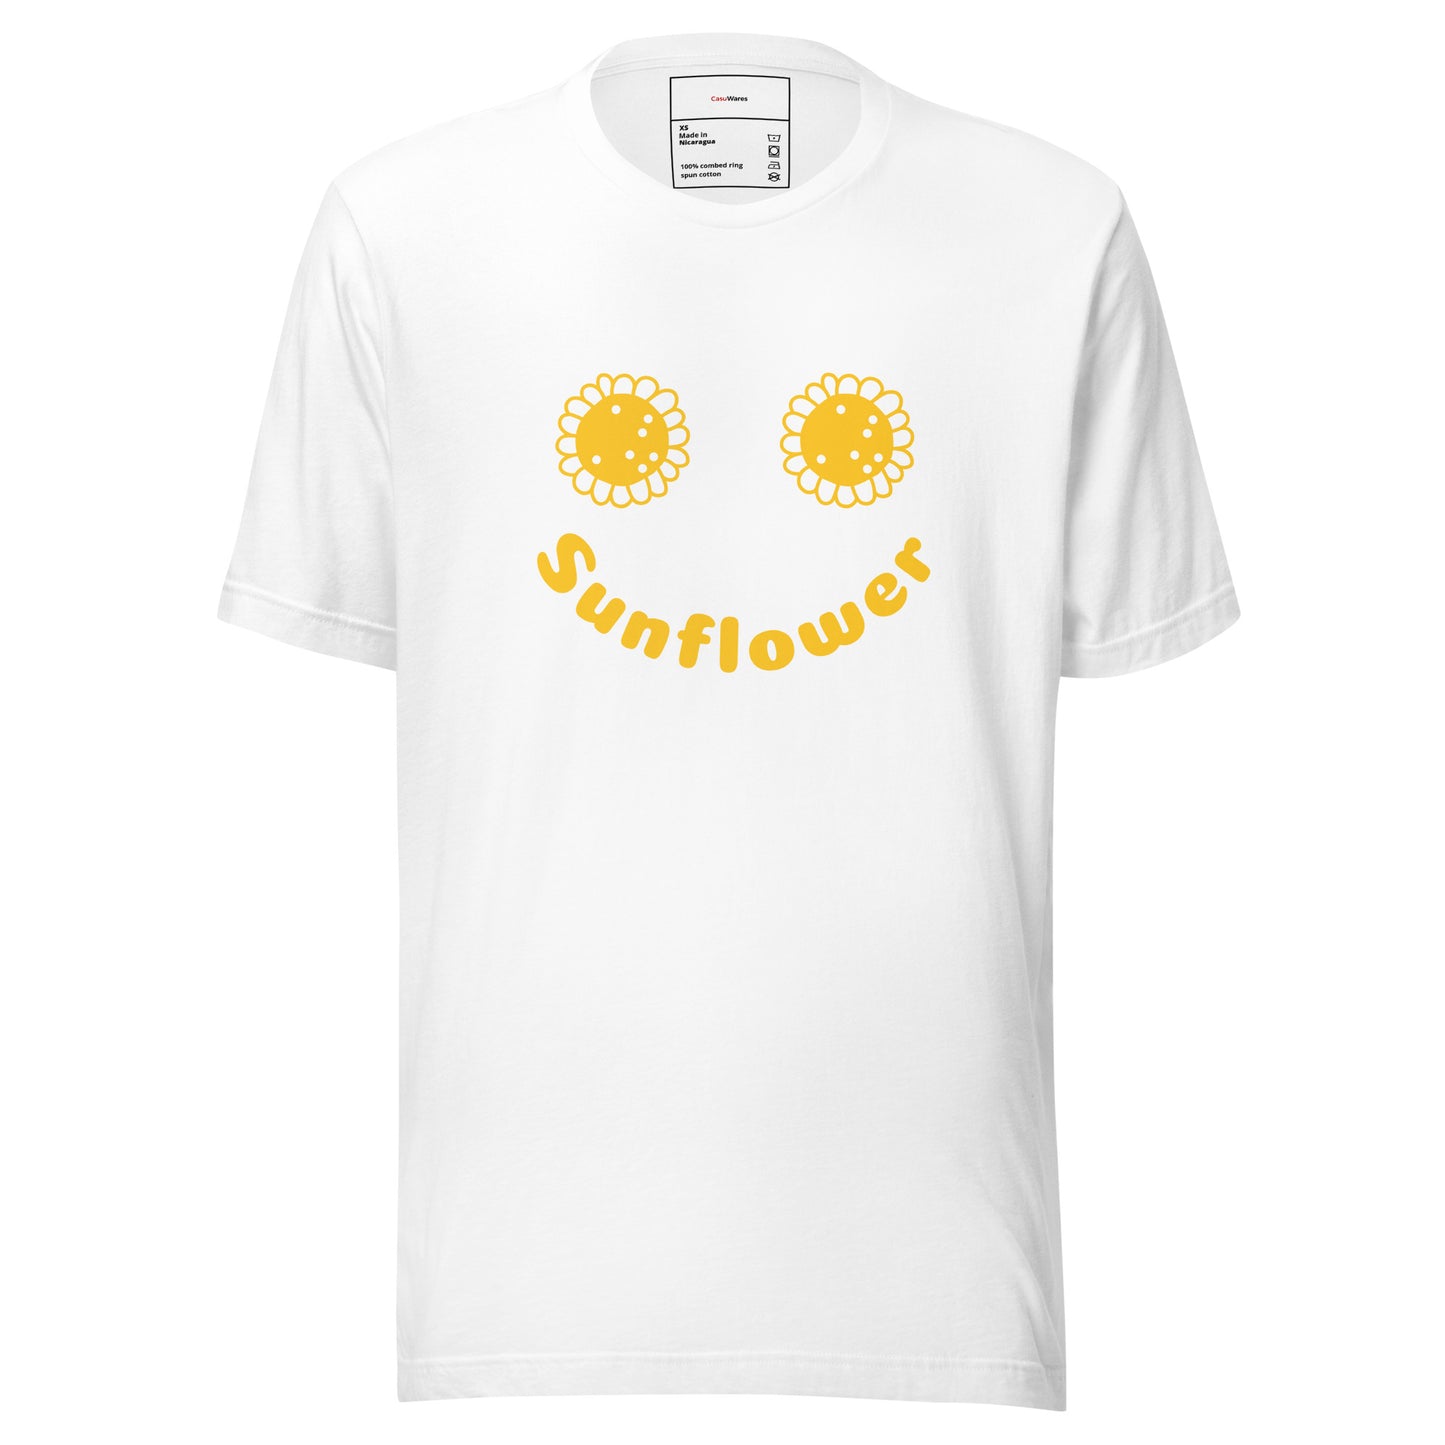 Women's smiley face t-shirt